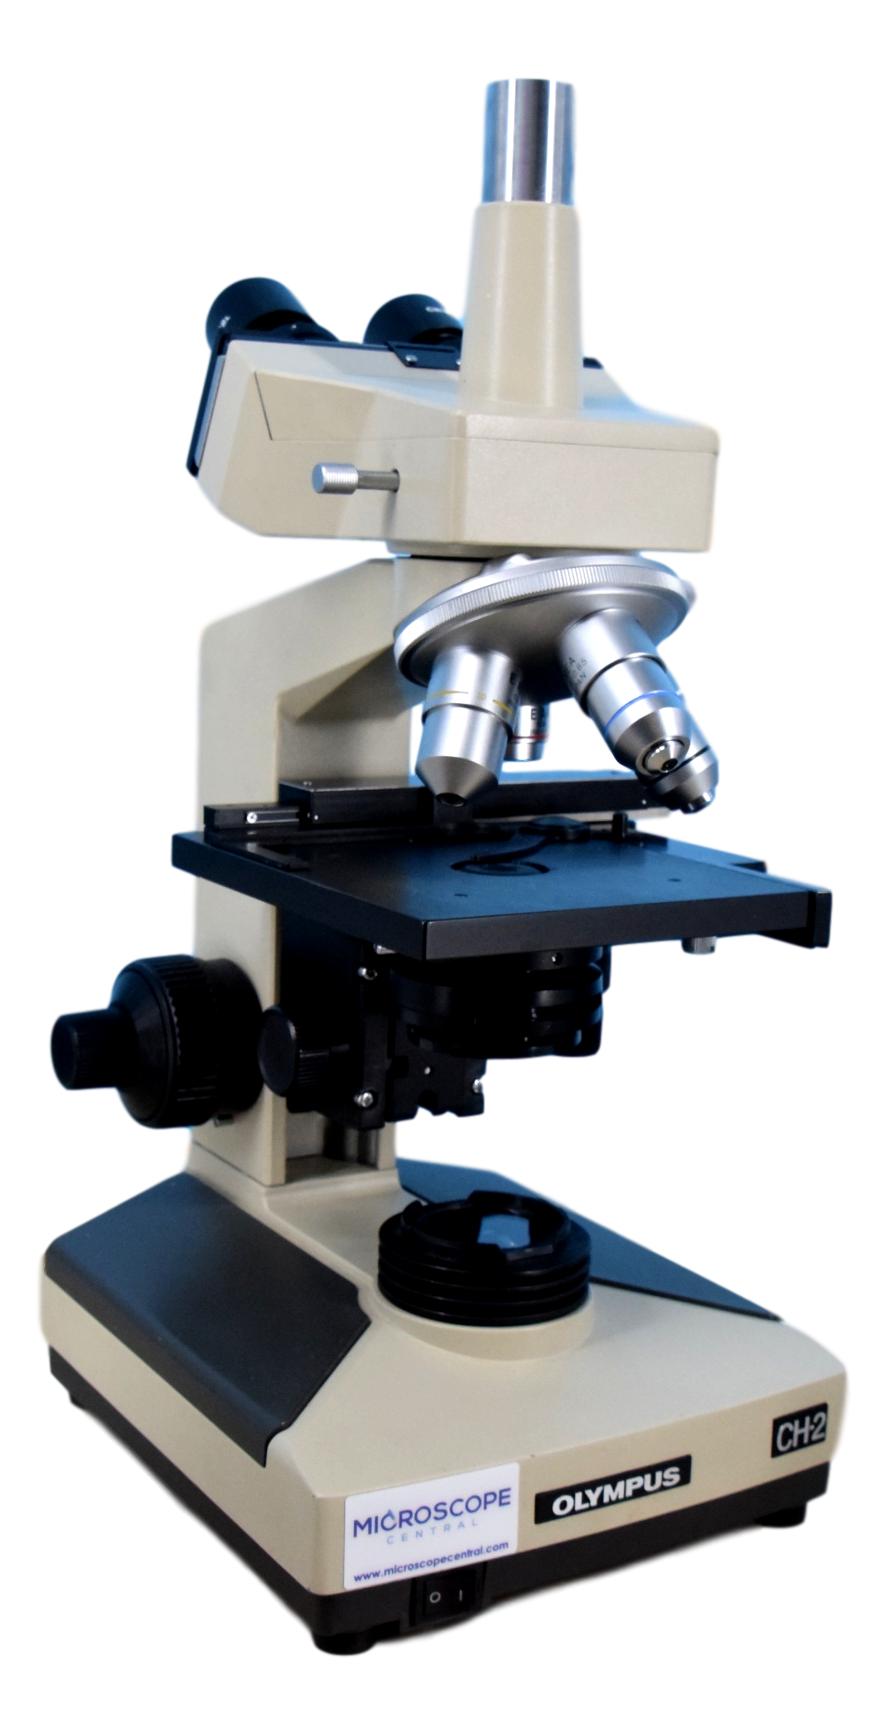 Olympus CH-2 Refurbished Microscope